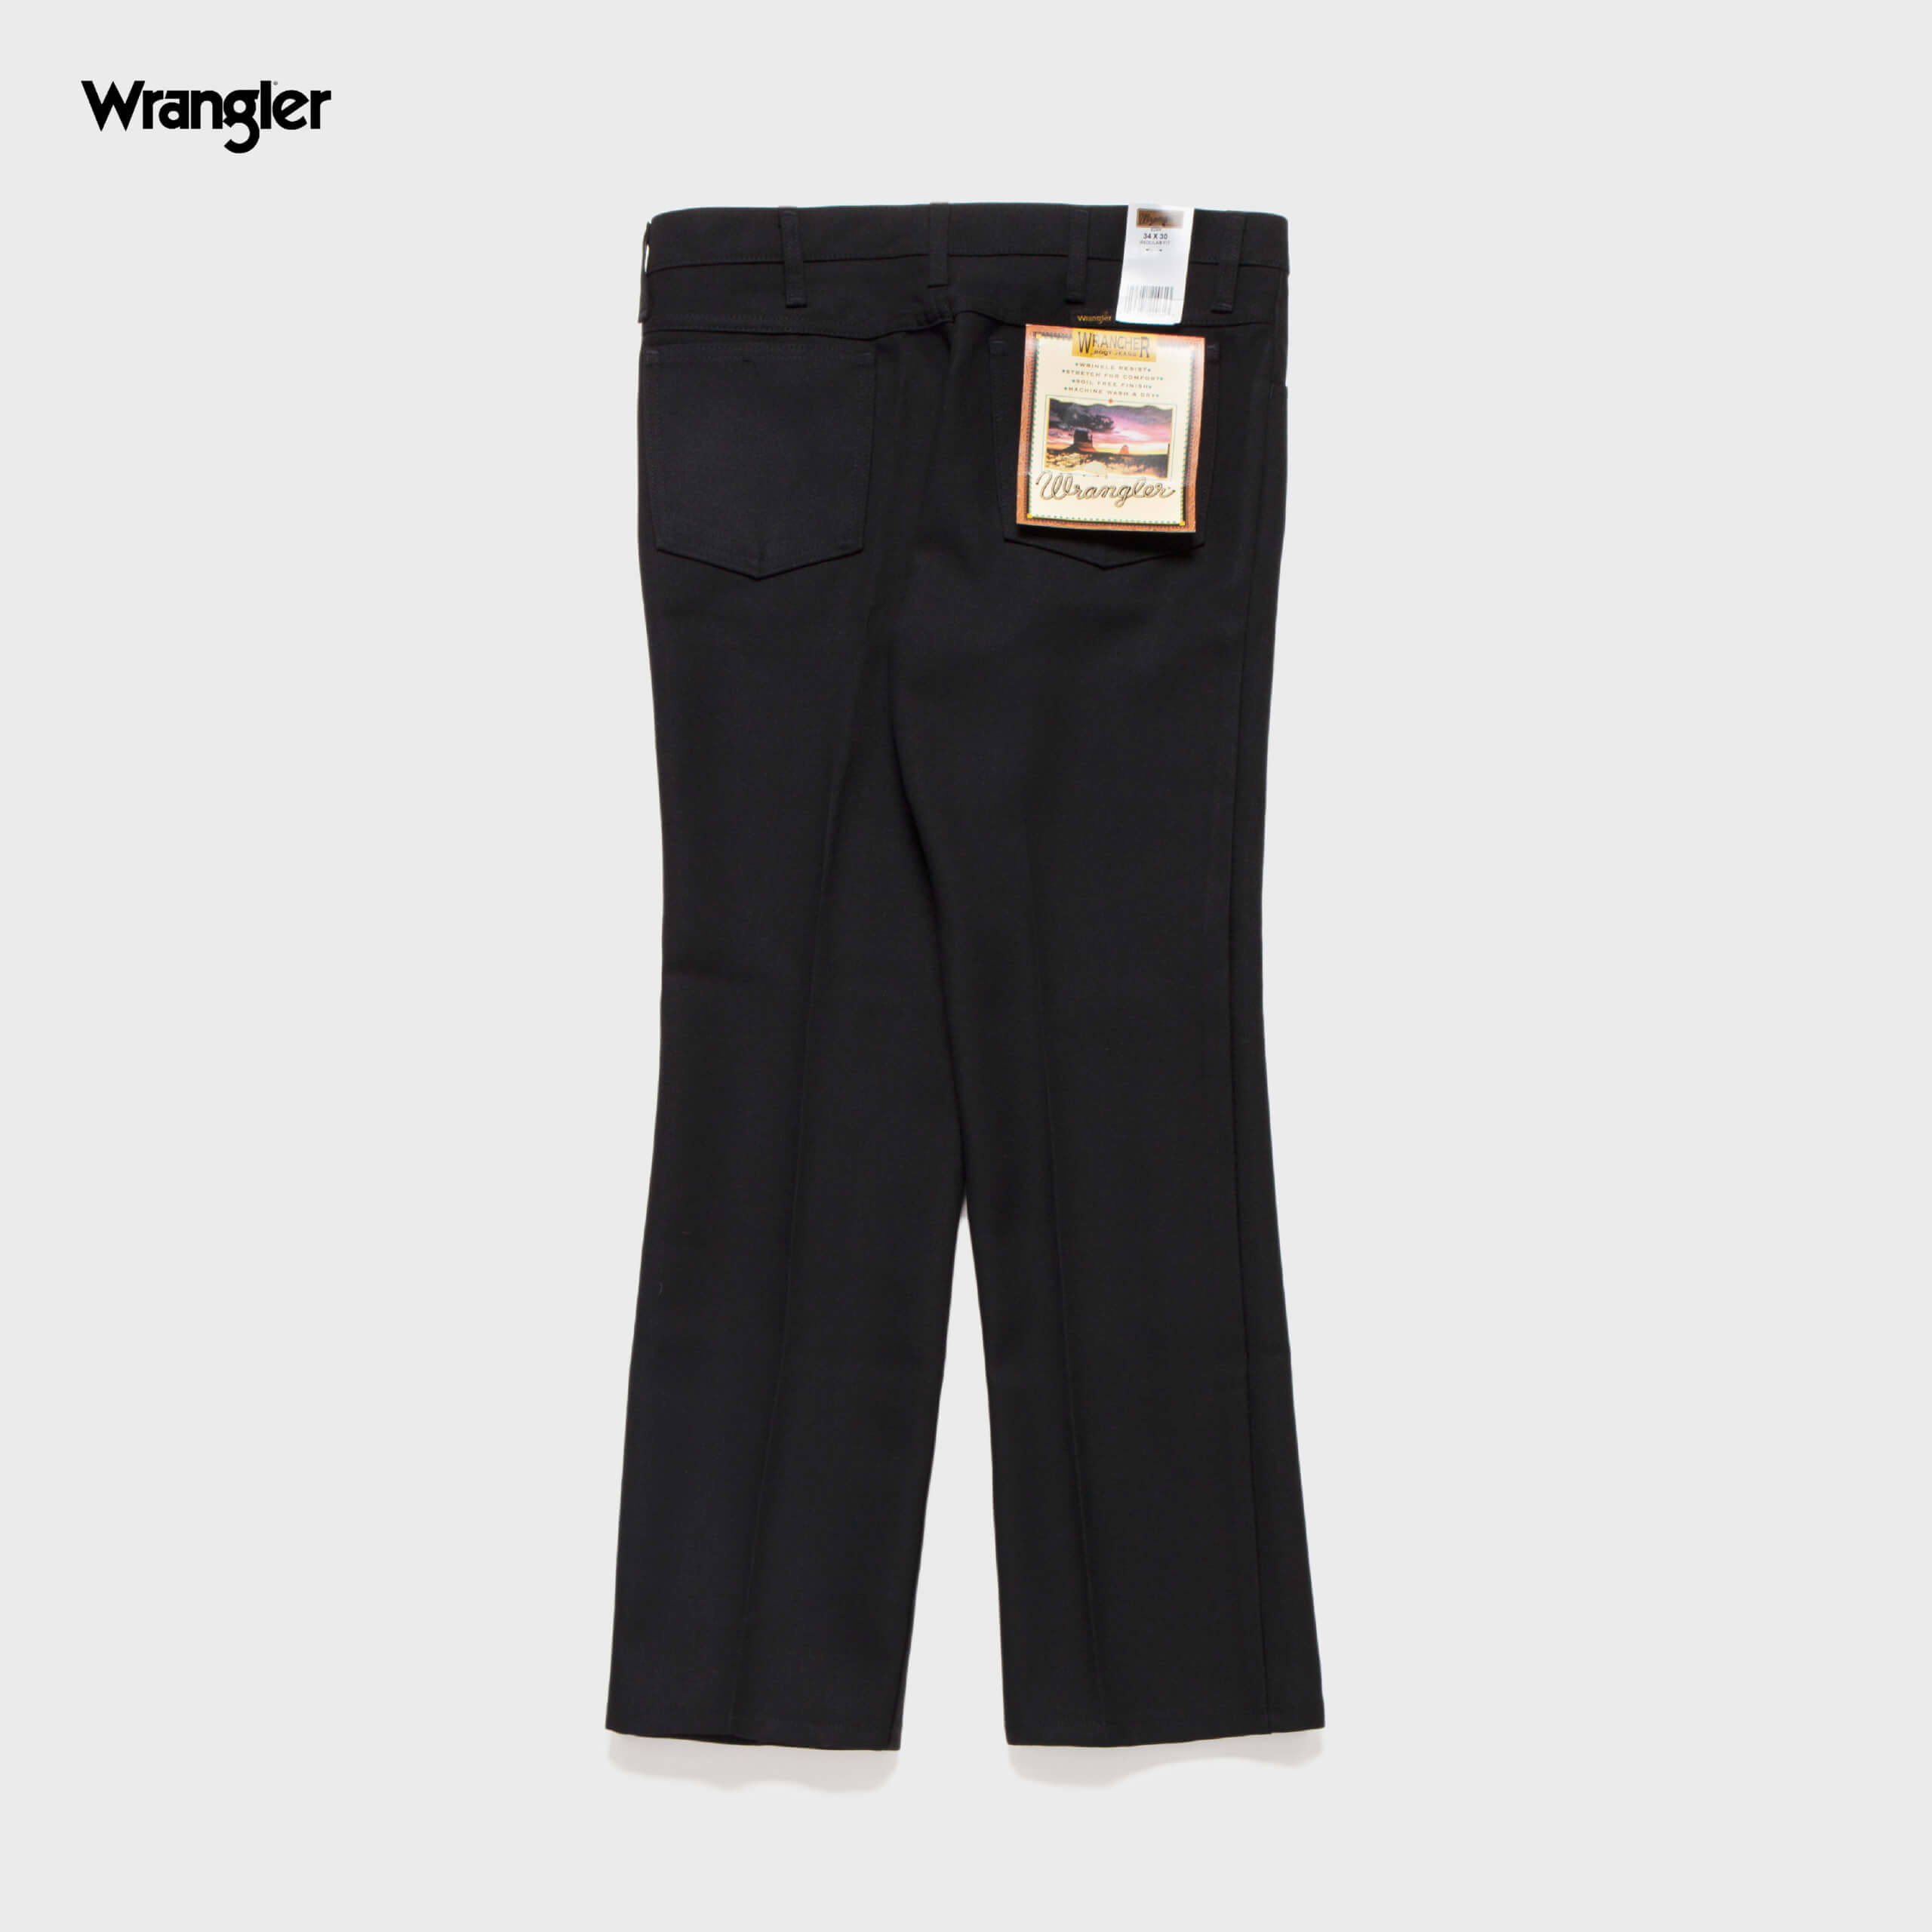 wrangler-wrancher-dress-jeans-black_p1